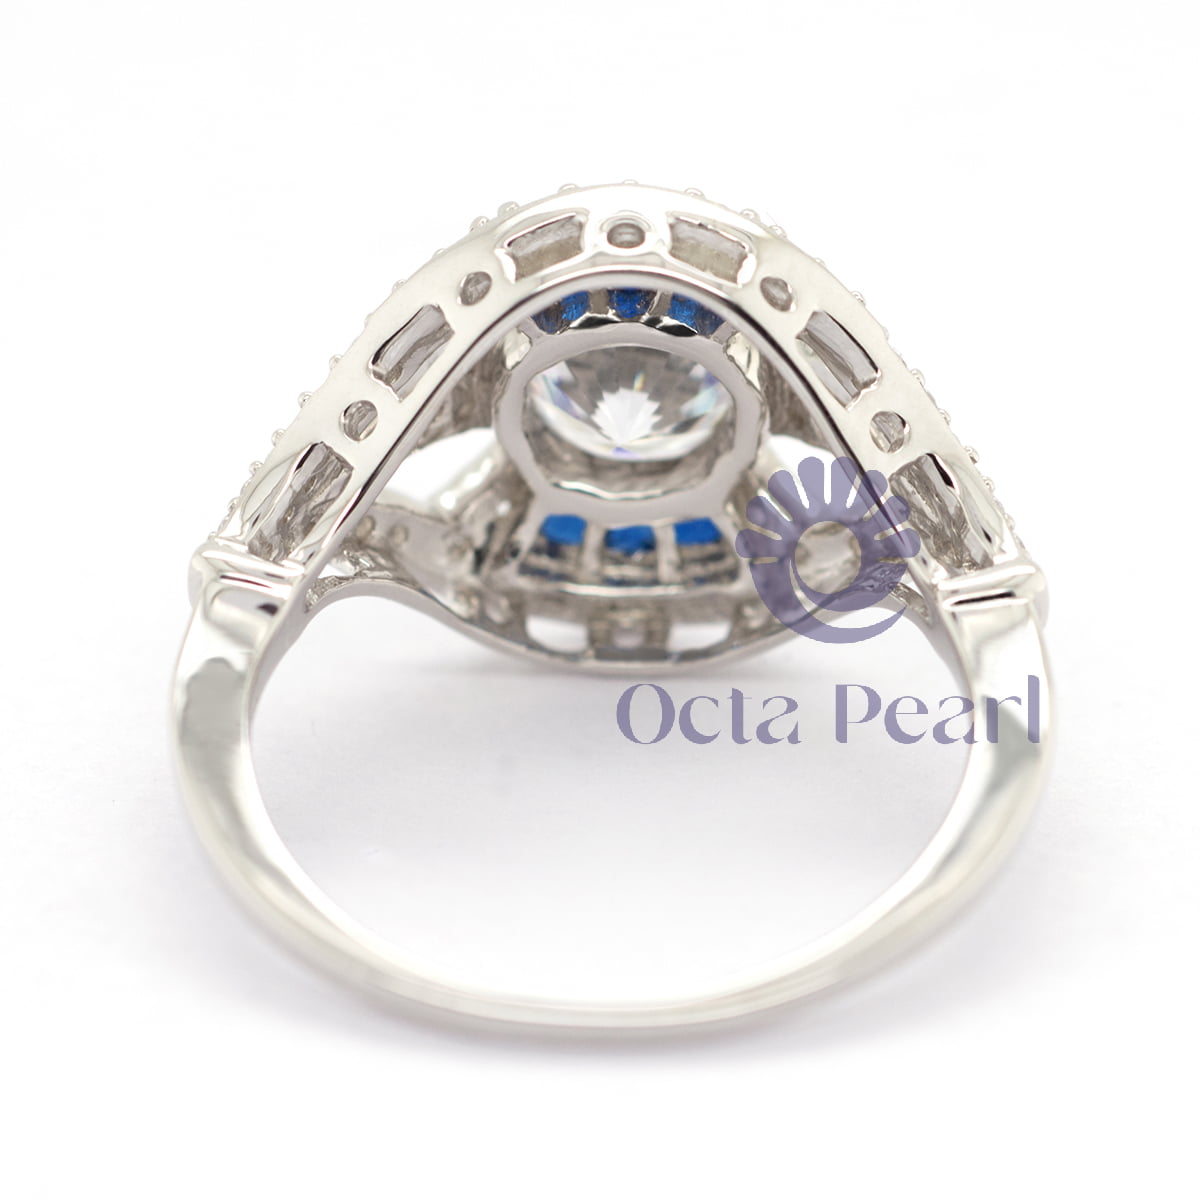 Vintage Style Blue Sapphire ring CZ Stone